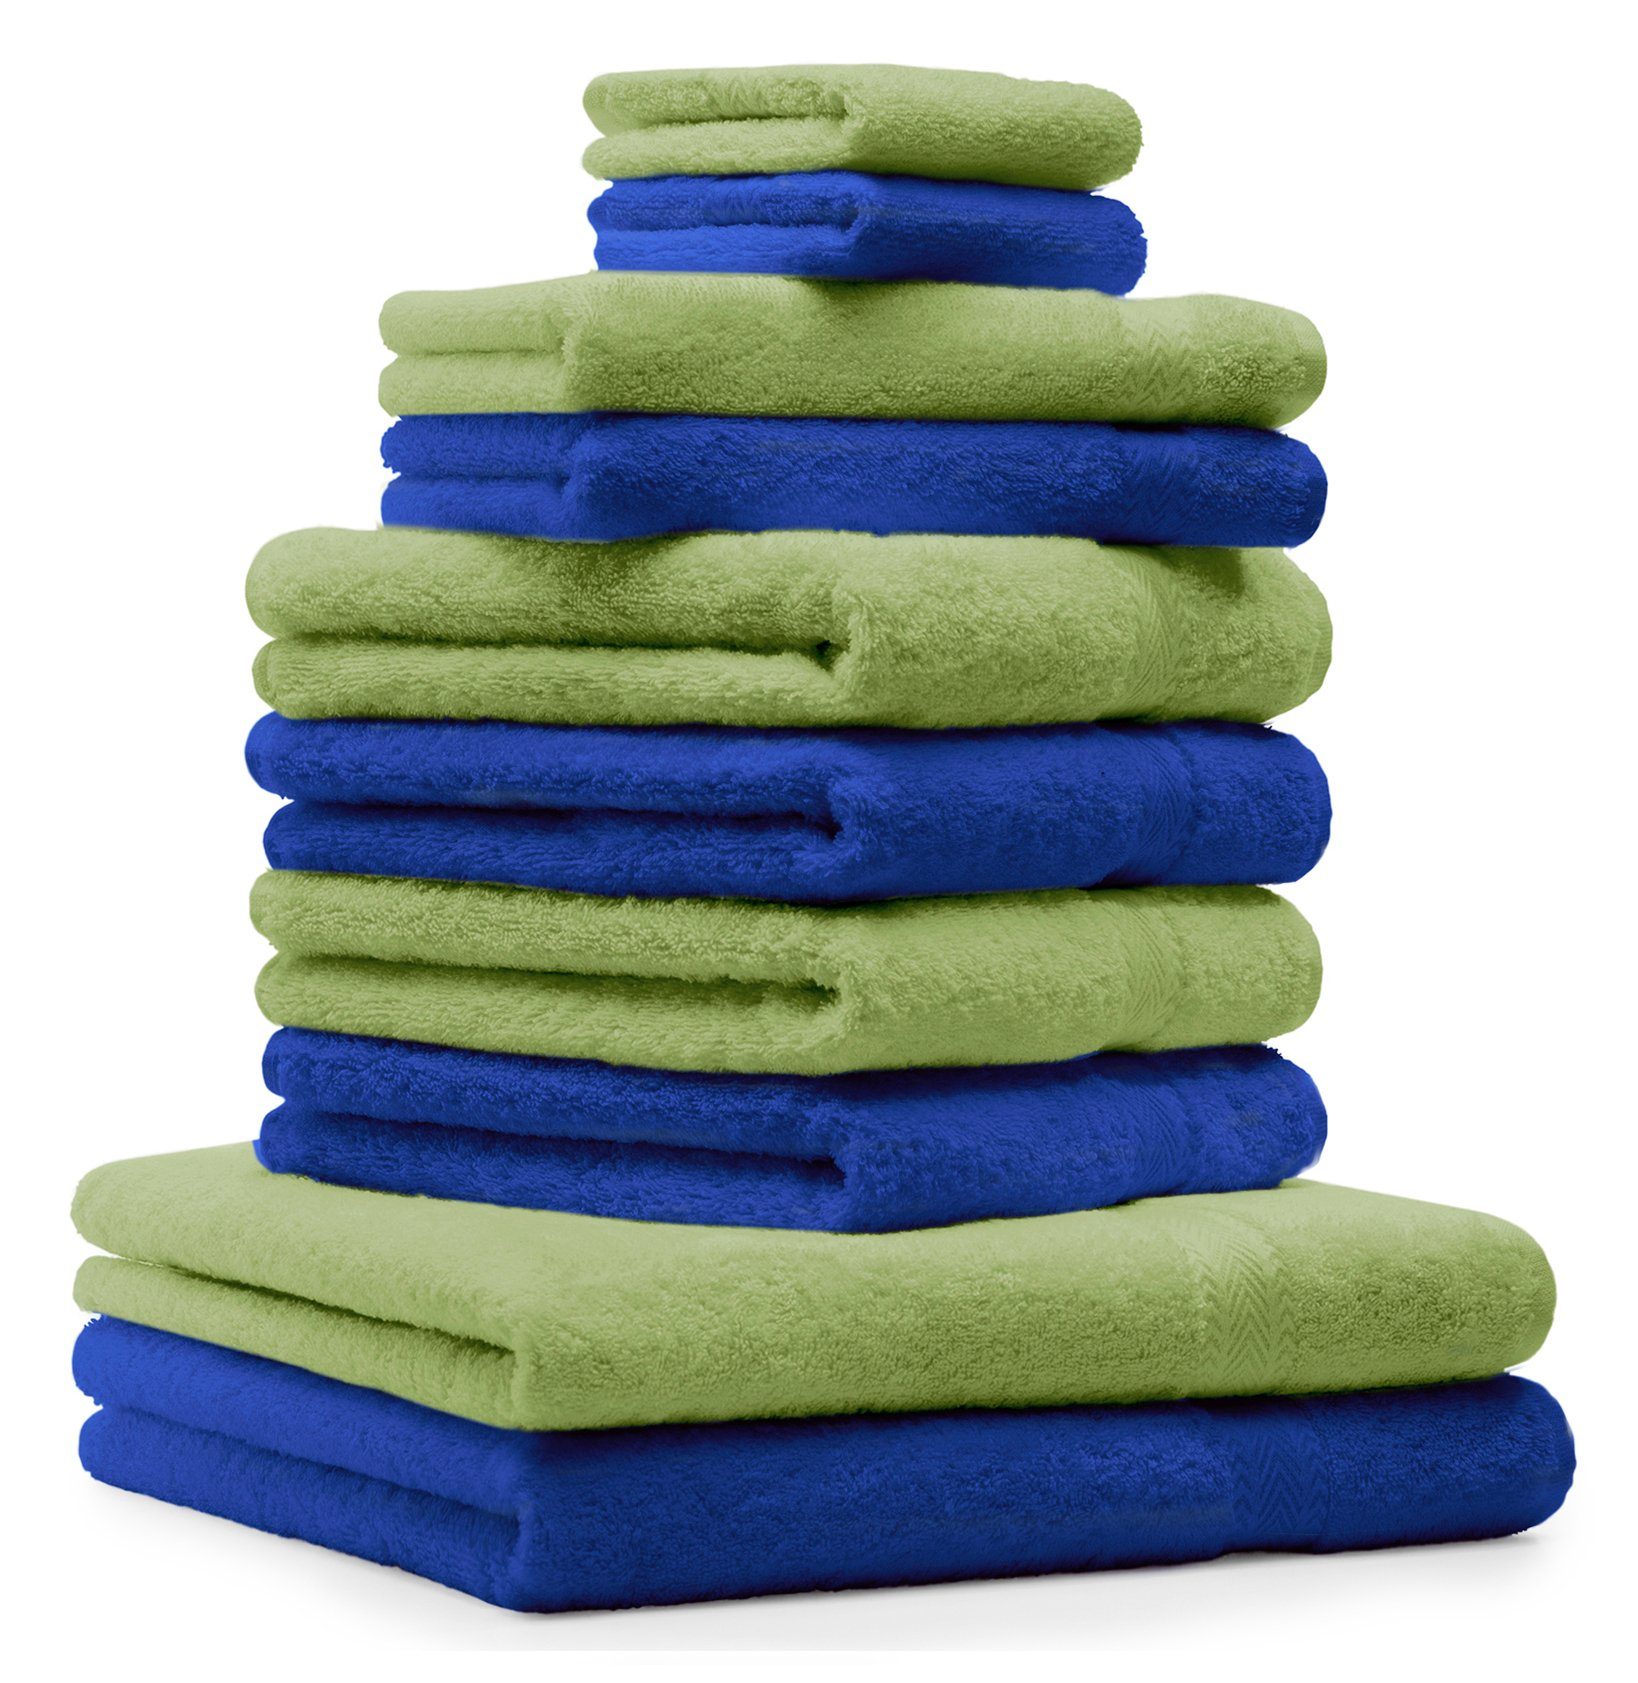 Betz Handtuch Set 10-TLG. Handtuch-Set Premium 100% Baumwolle 2 Duschtücher 4 Handtücher 2 Gästetücher 2 Waschhandschuhe Farbe Royal Blau & Apfel Grün, 100% Baumwolle, (10-tlg)